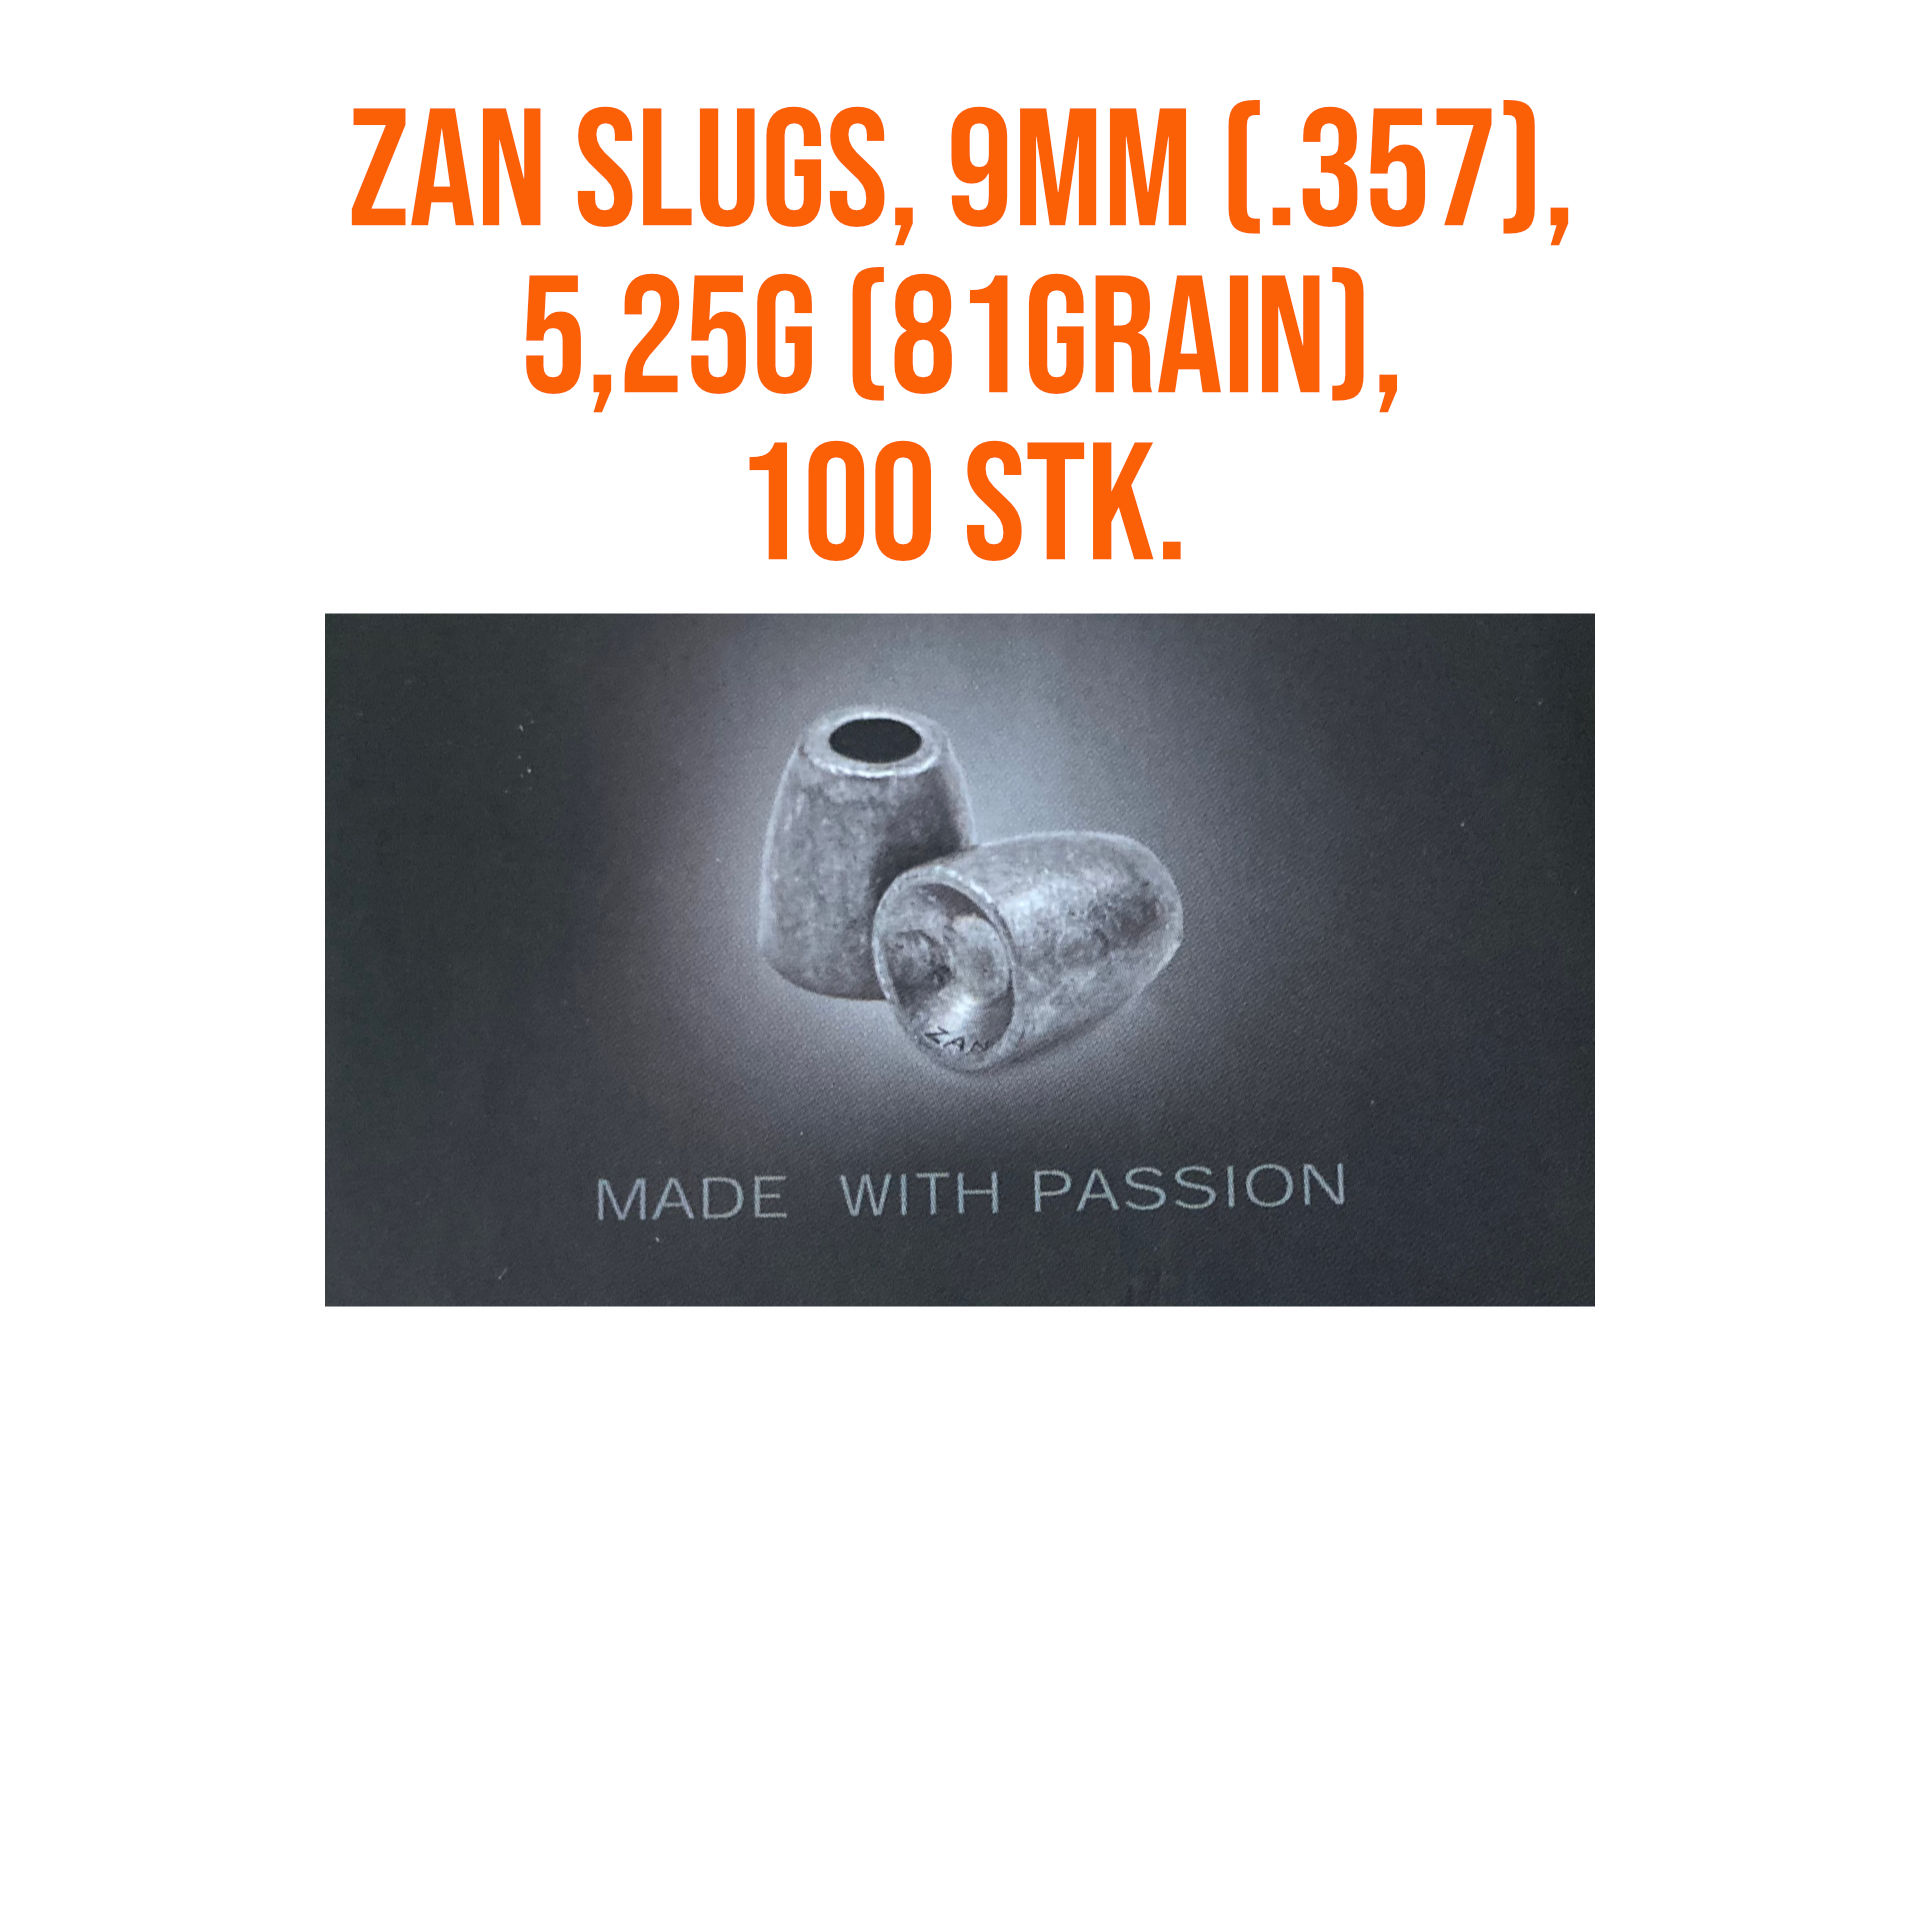 ZAN Slugs, 9mm (.357), 5,25g (81grain), 100 Stk.